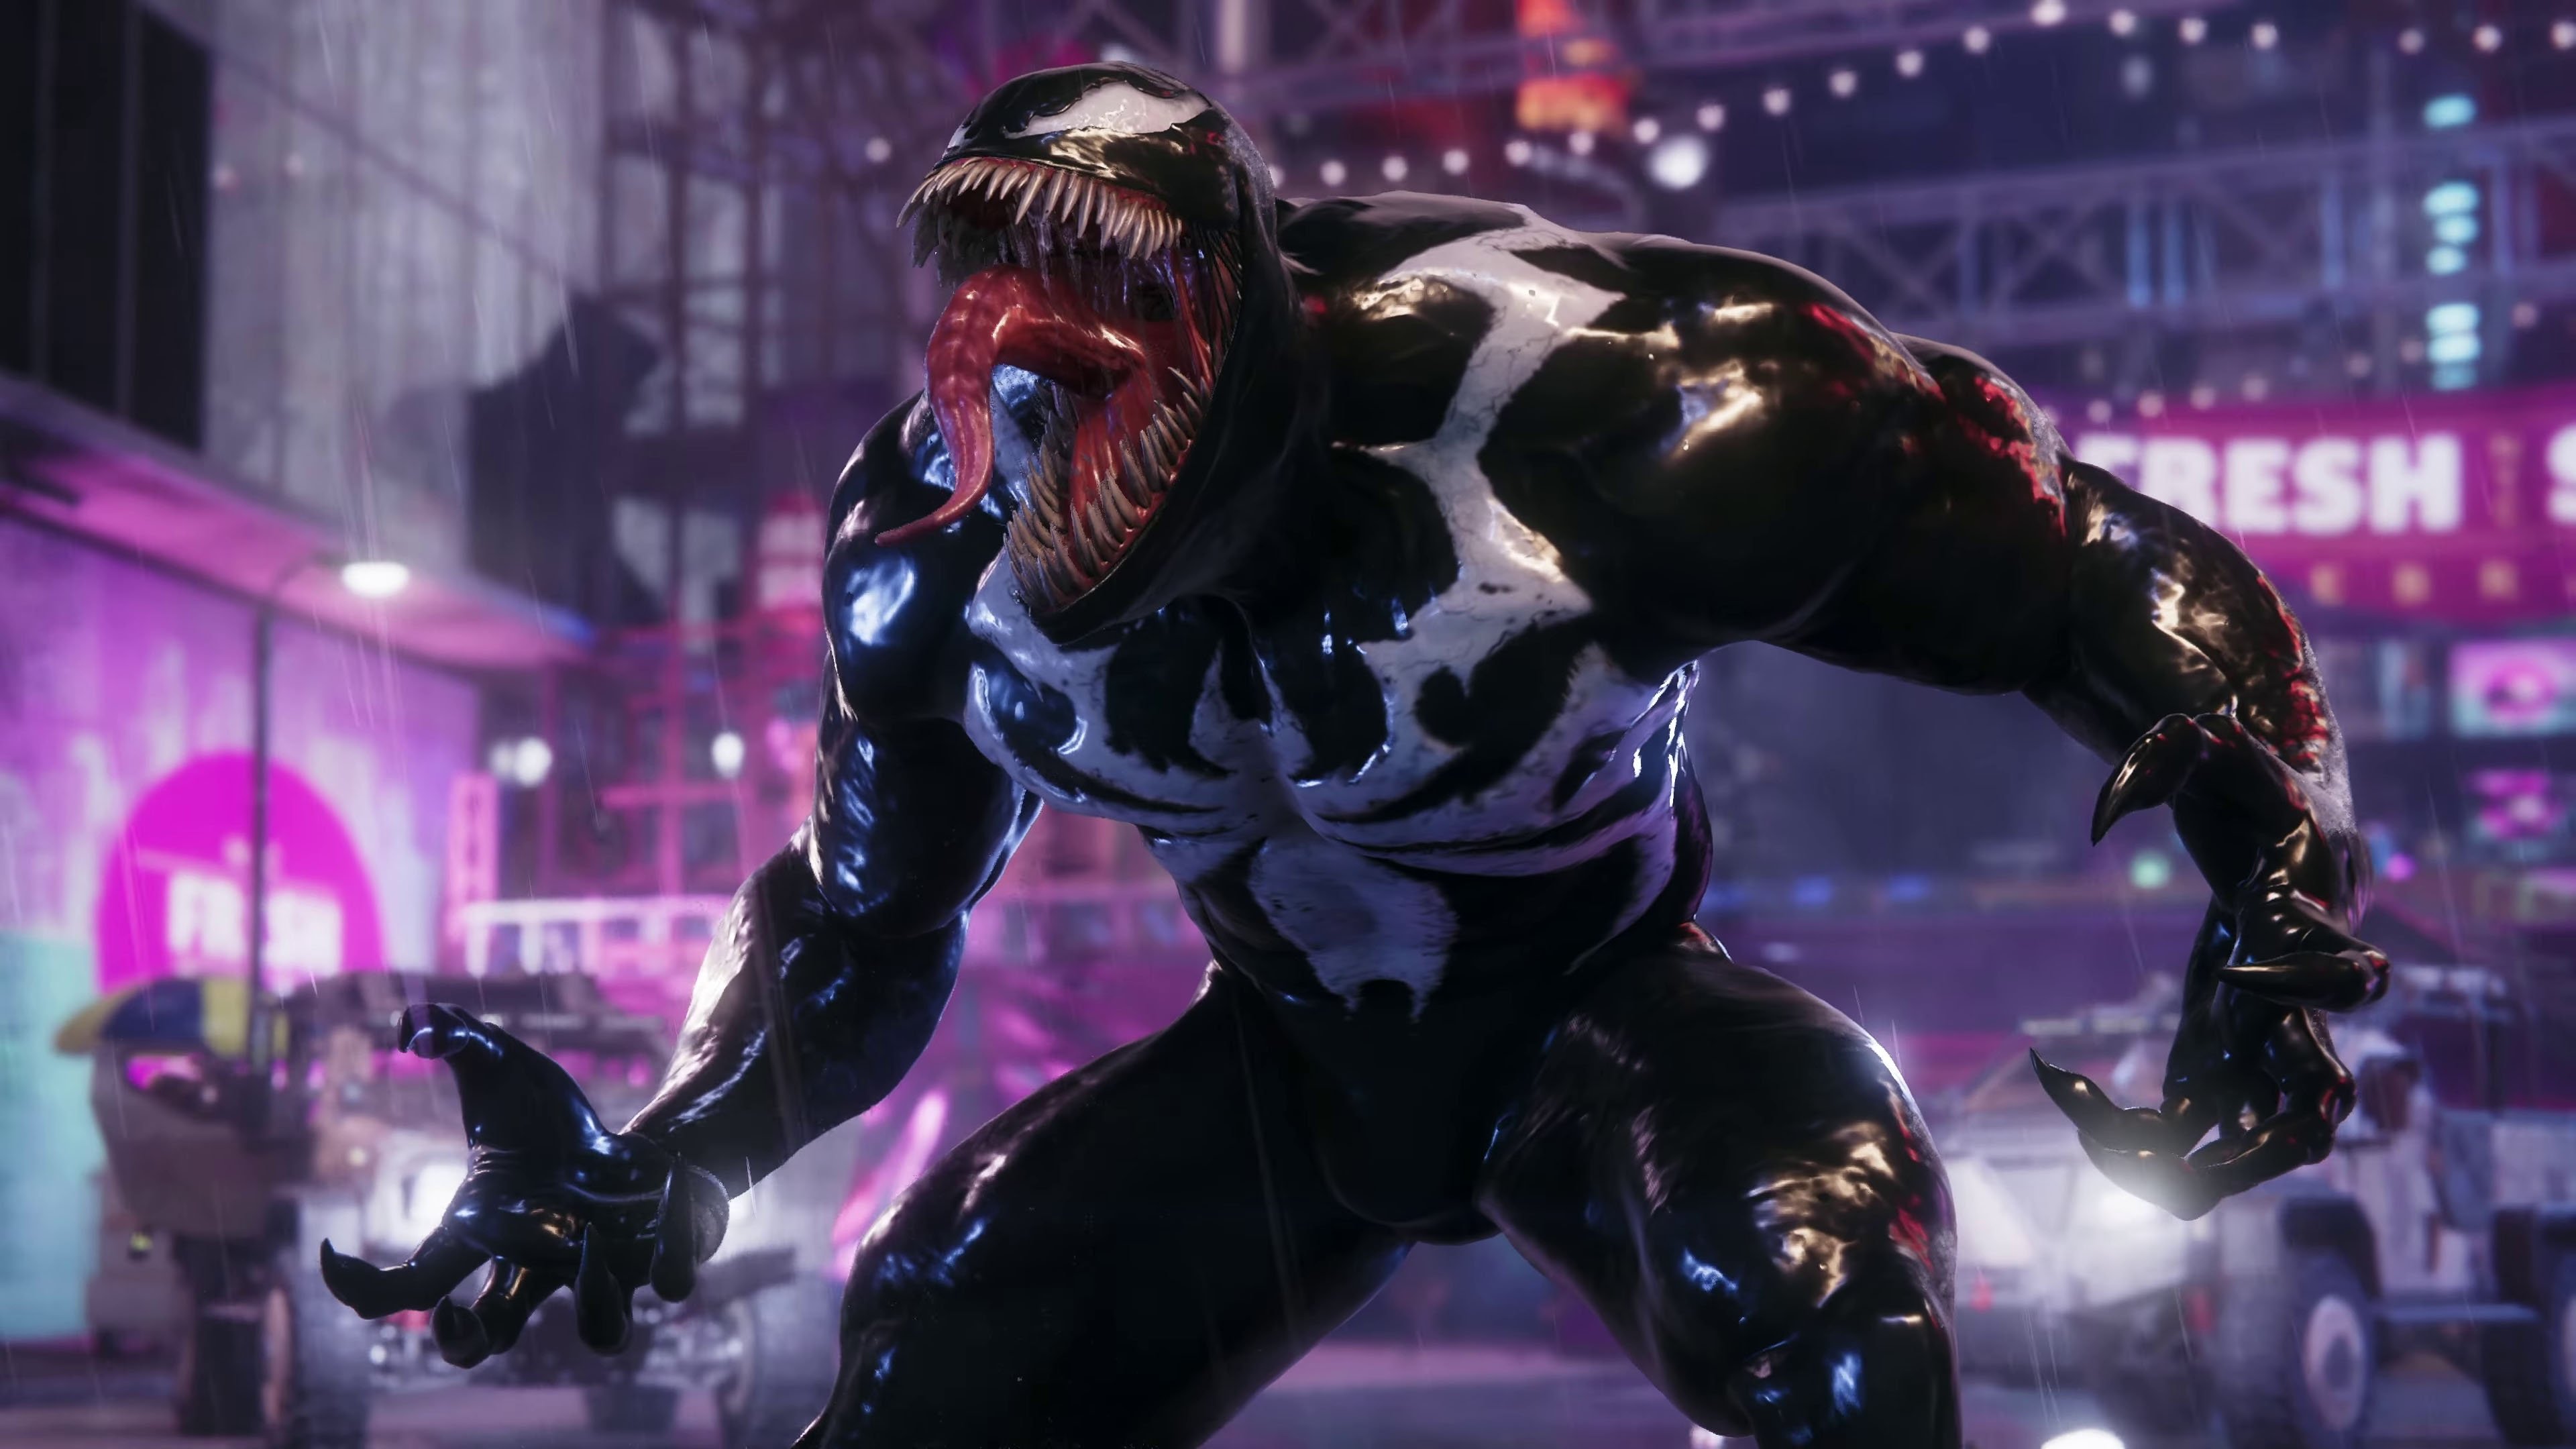 Marvel's Spider-Man 2 'Story' trailer, limited edition PS5 bundle